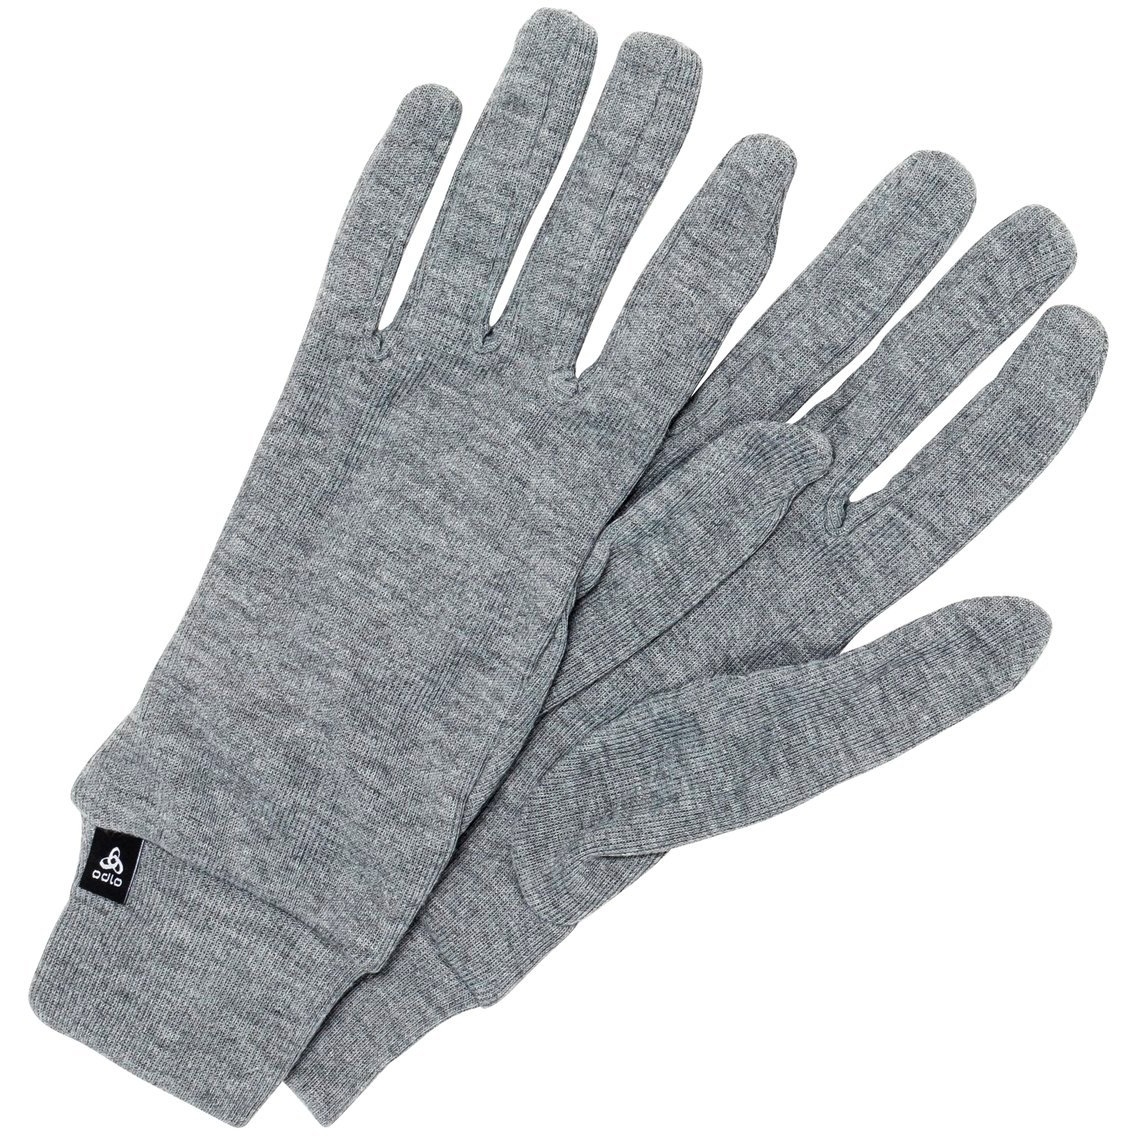 Produktbild von Odlo Active Warm ECO Handschuhe - odlo steel grey melange